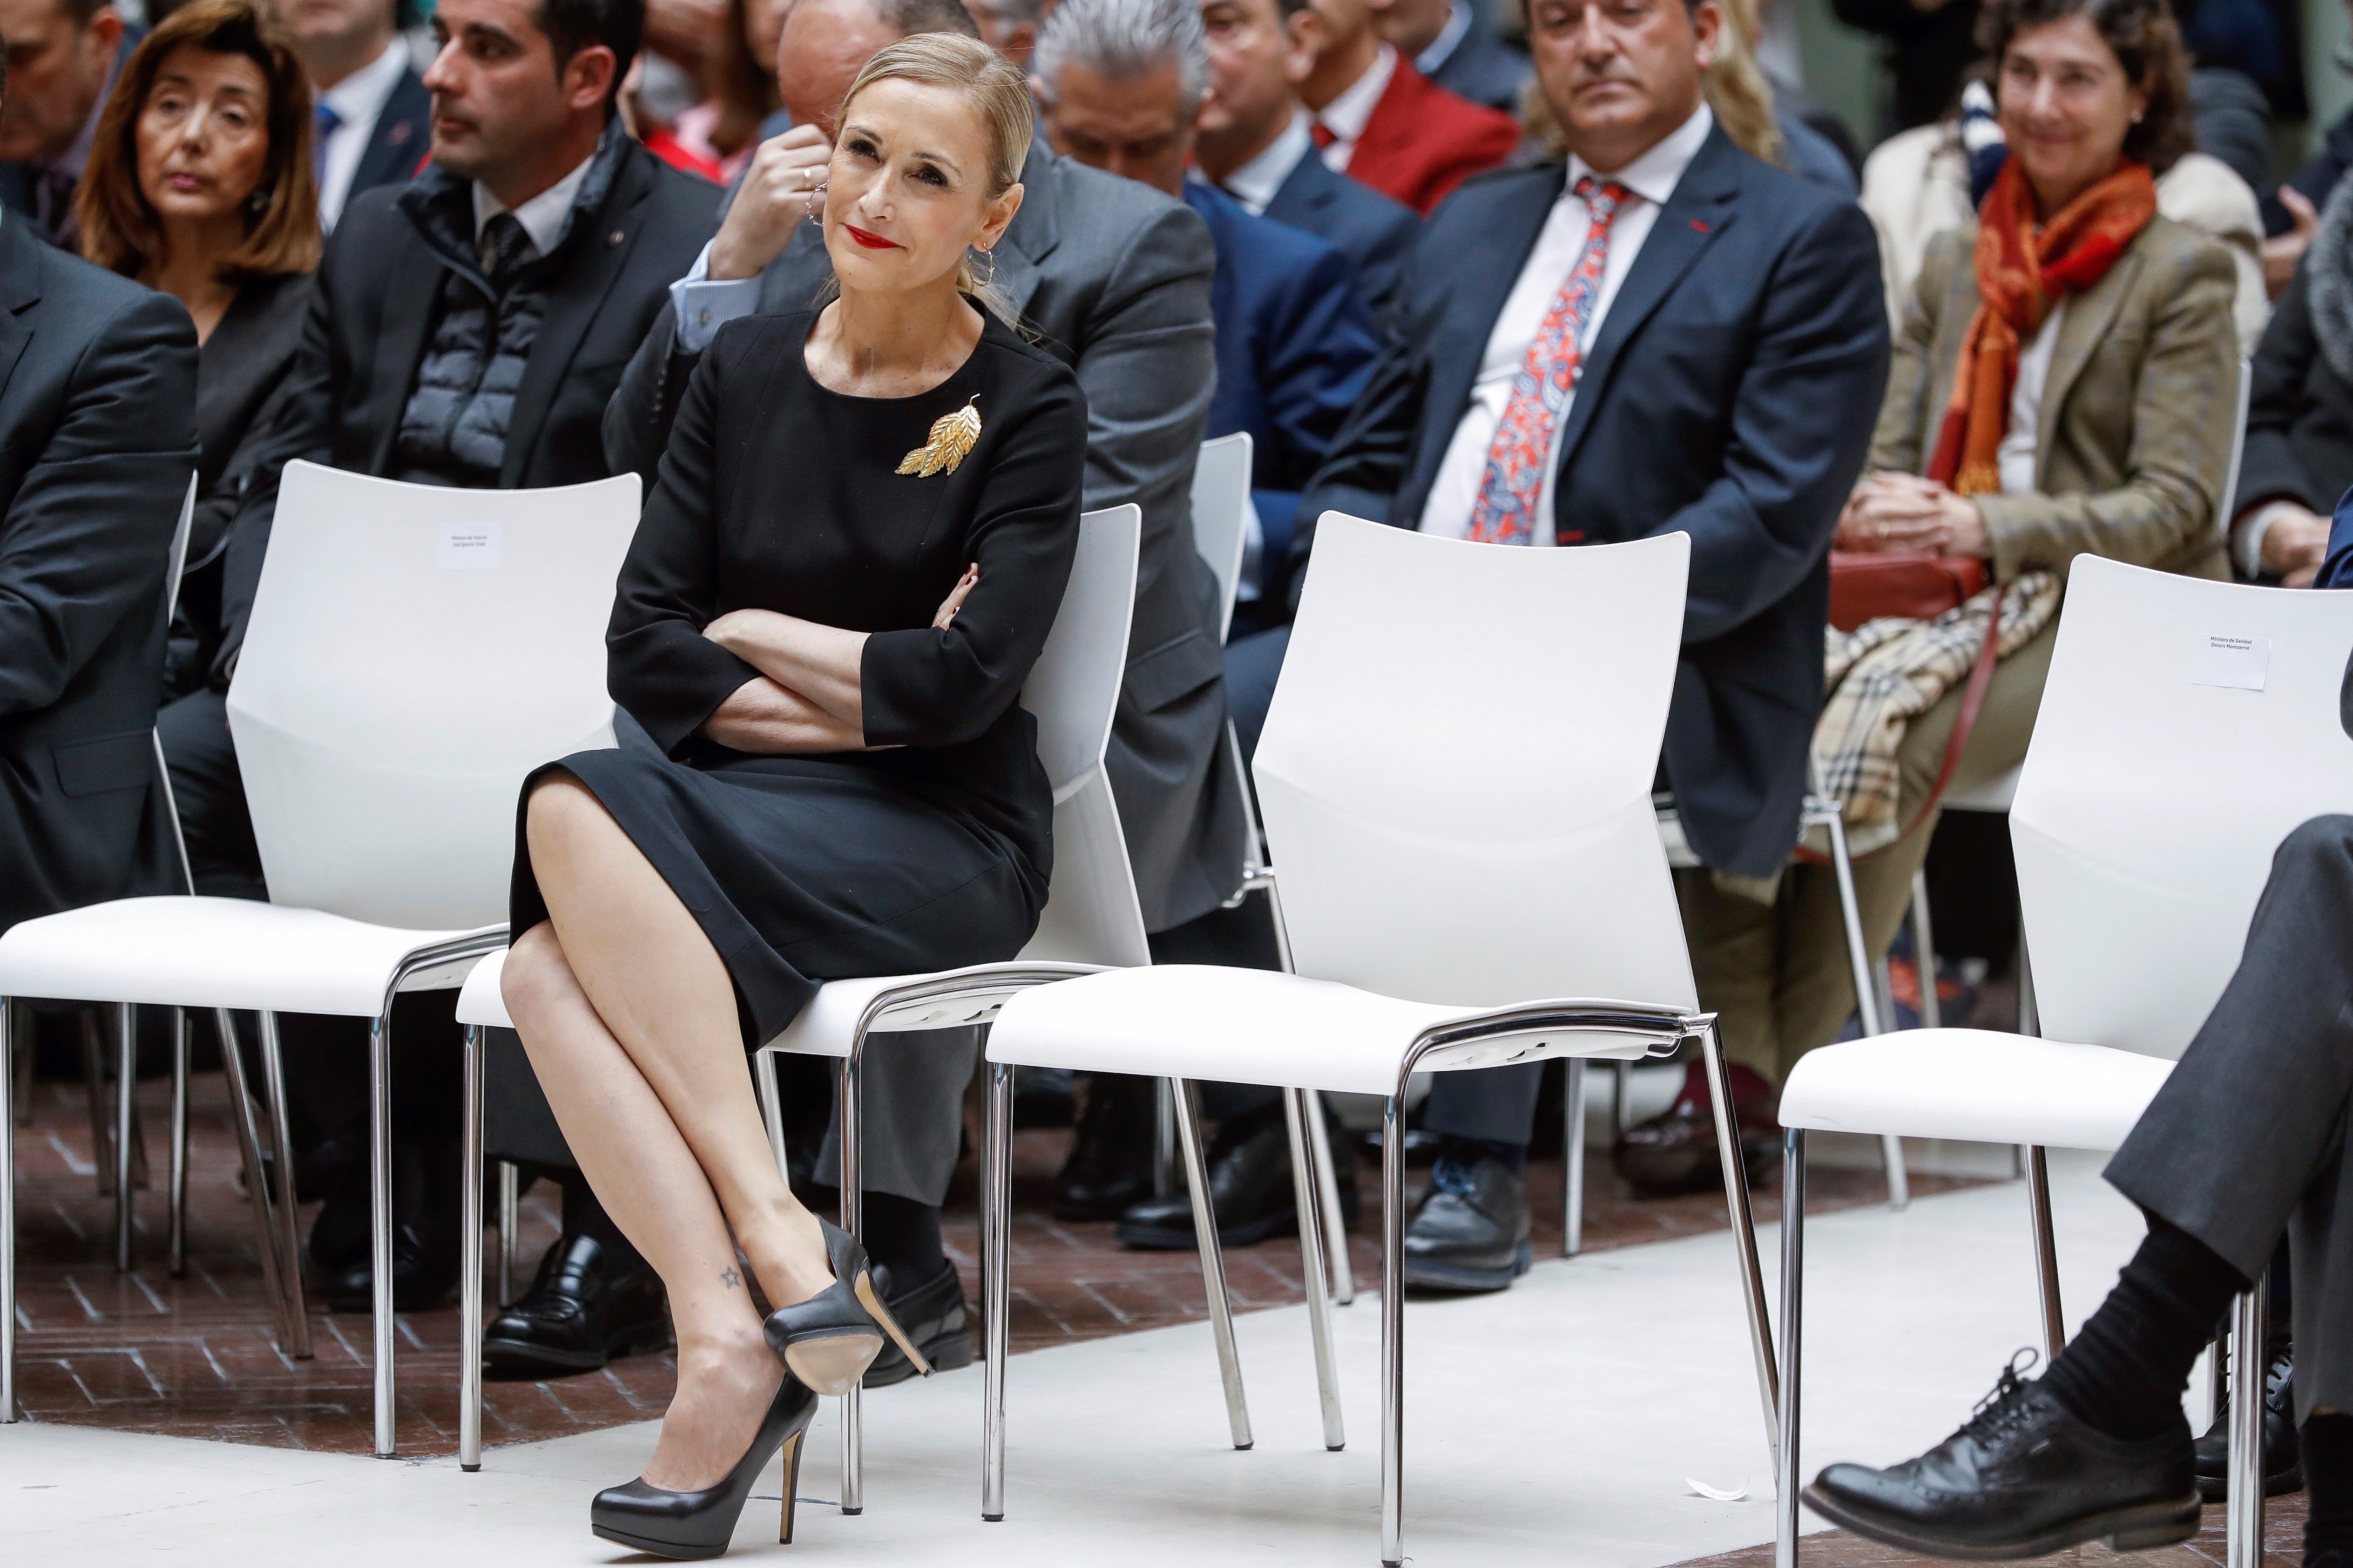 La caiguda de Cifuentes, en espera d'un gest de Rajoy